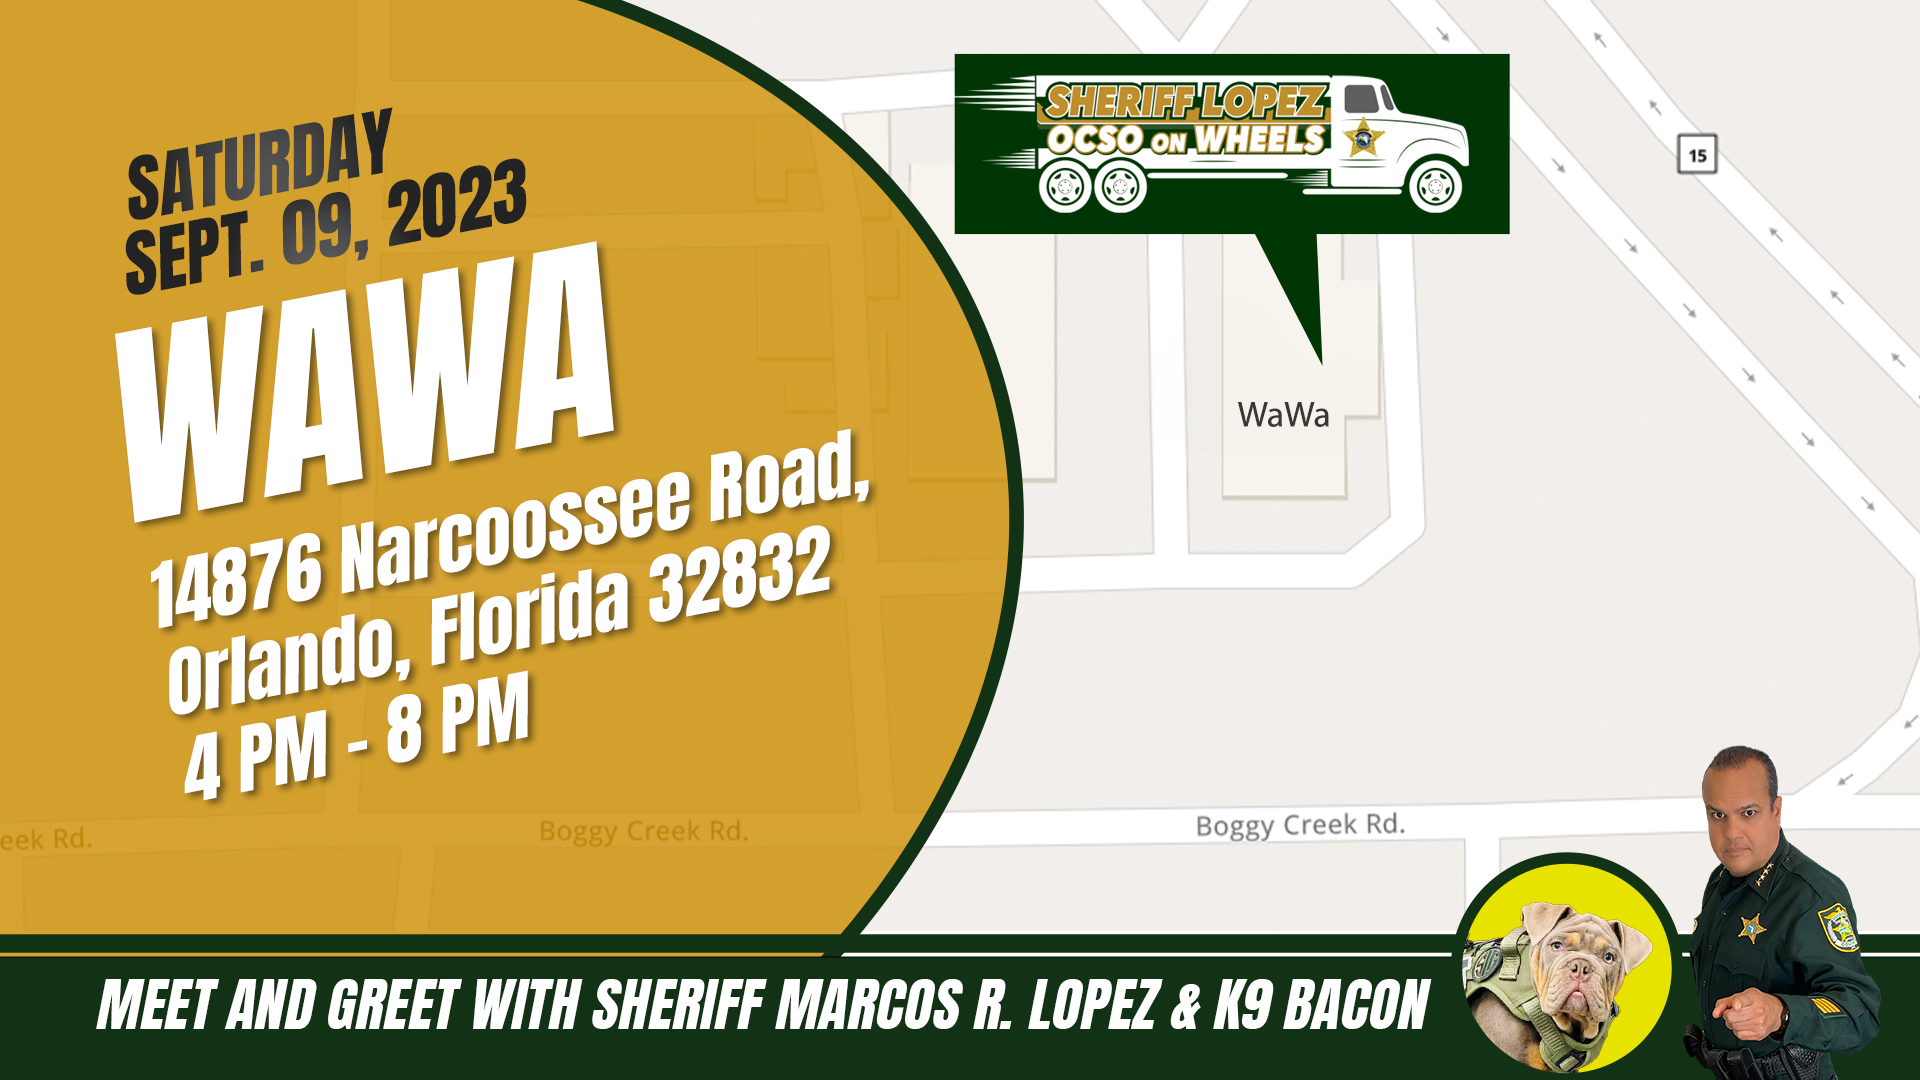 WaWa, 14876 Narcoossee Road (Corner of Narcoossee Road and Boggy Creek Road), Orlando, Florida 32832